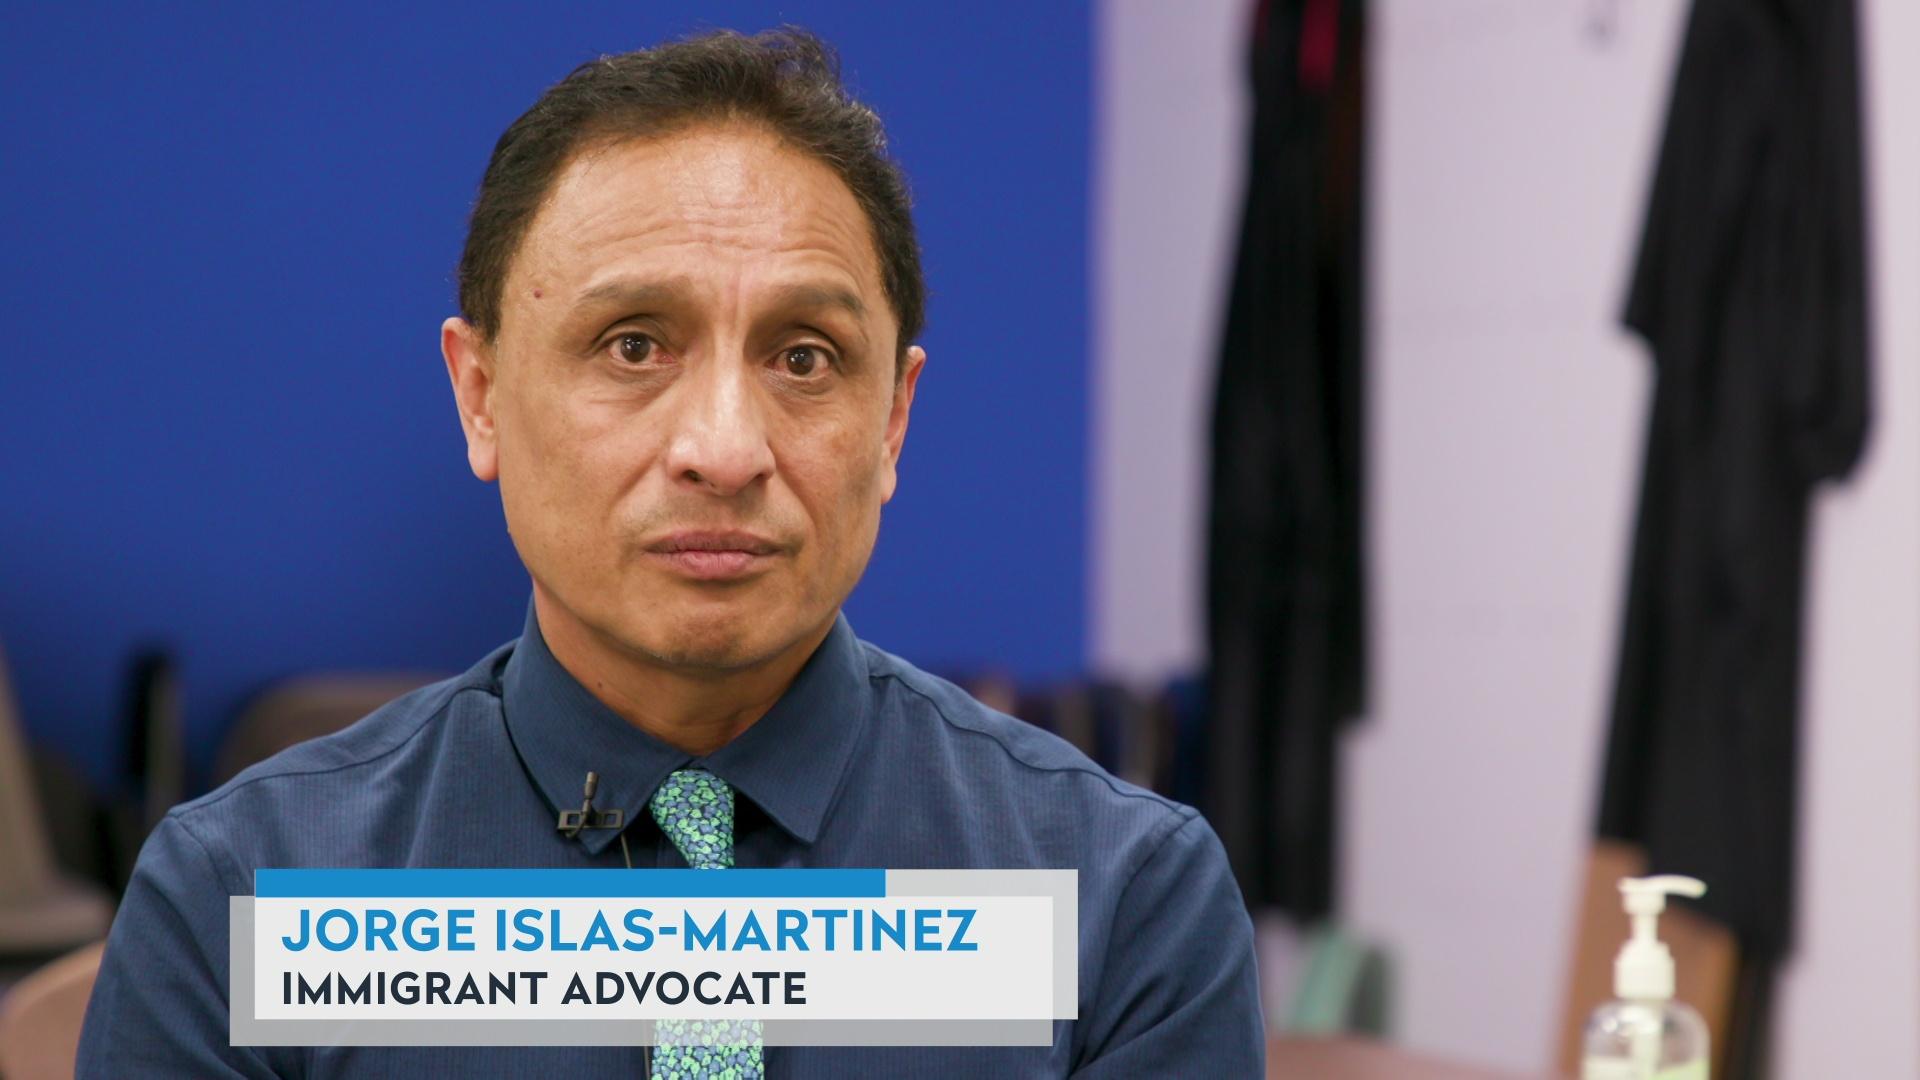 Jorge Islas-Martinez on delays, difficulties migrants face